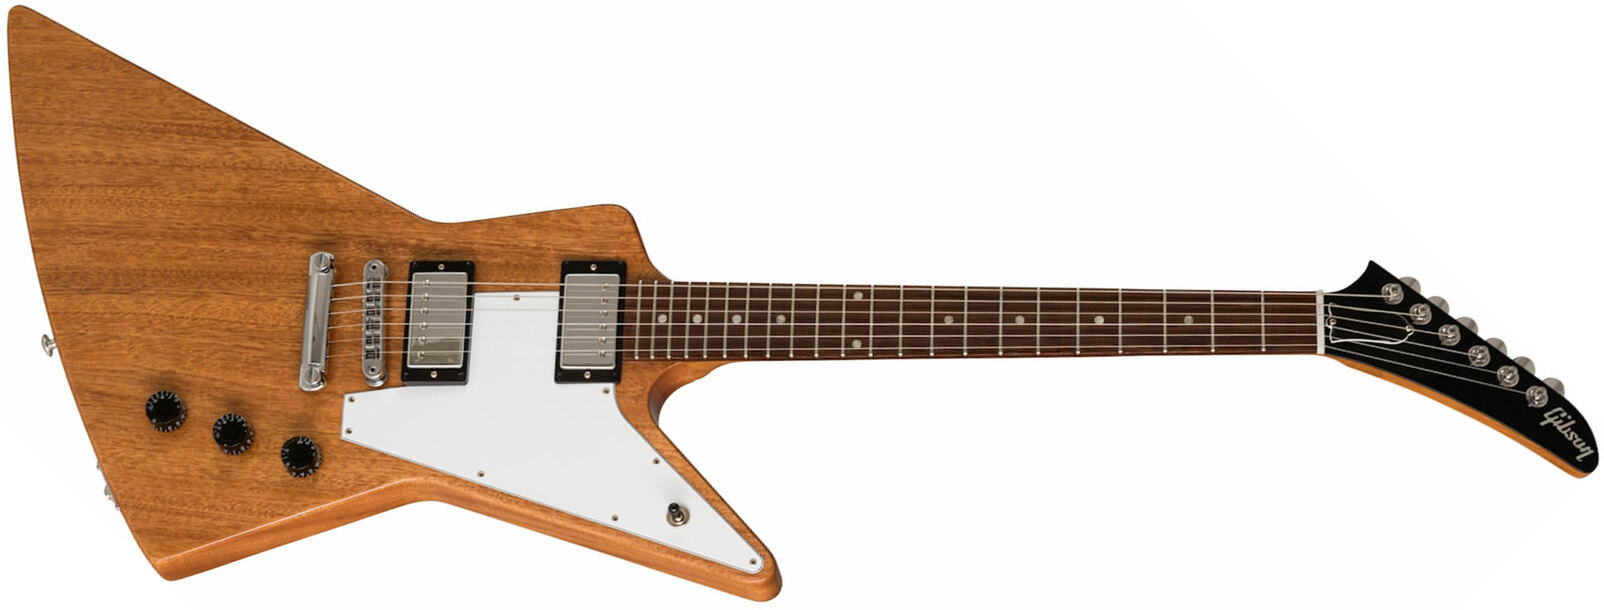 Gibson Explorer Original 2h Ht Rw - Antique Natural - Retro rock electric guitar - Main picture